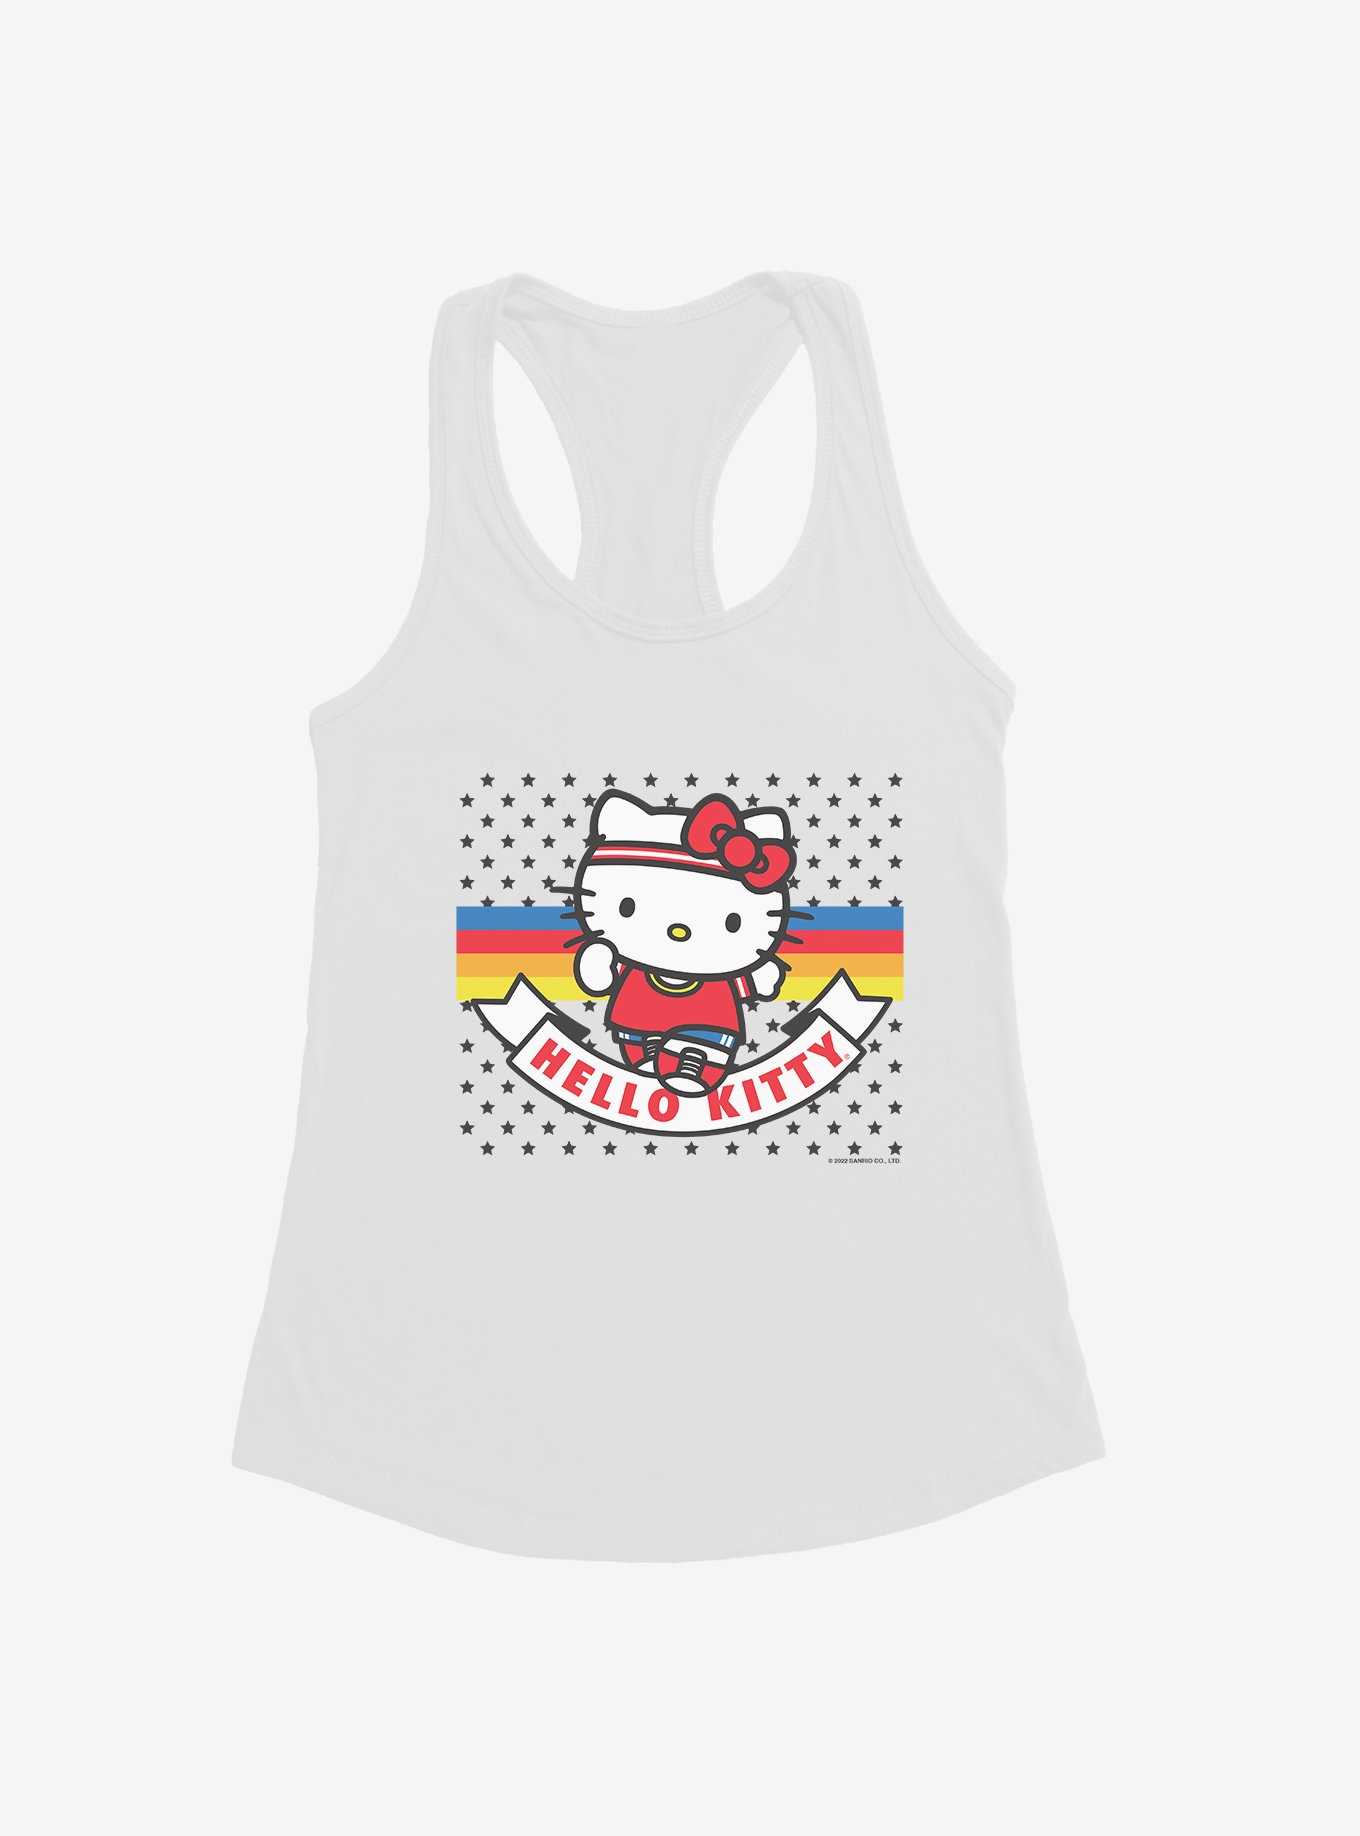 Hello Kitty Sports & Dots Girls Tank, , hi-res